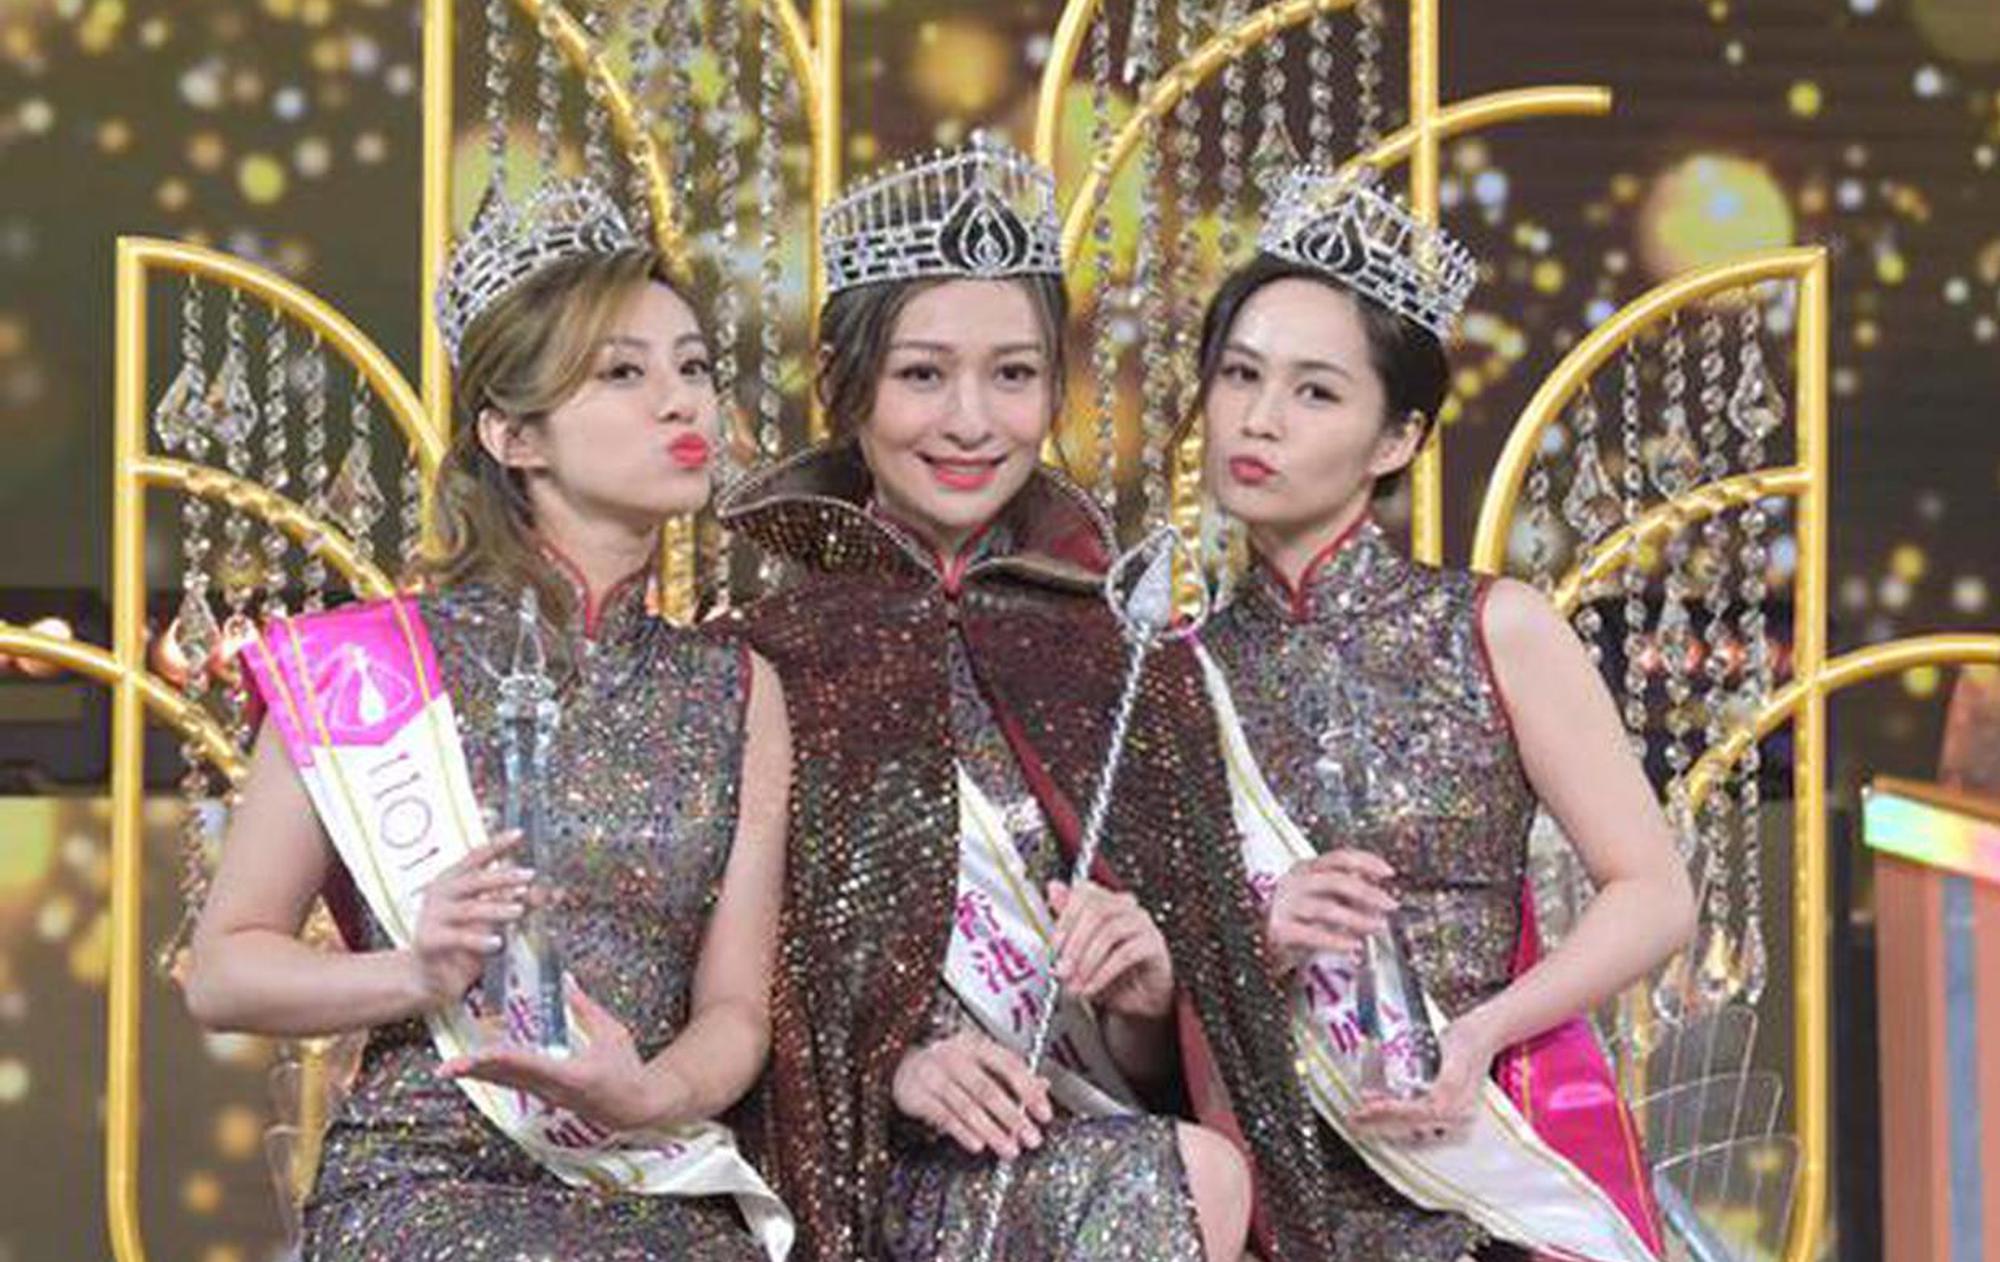 Denice Lam, 27, crowned Miss Hong Kong 2022